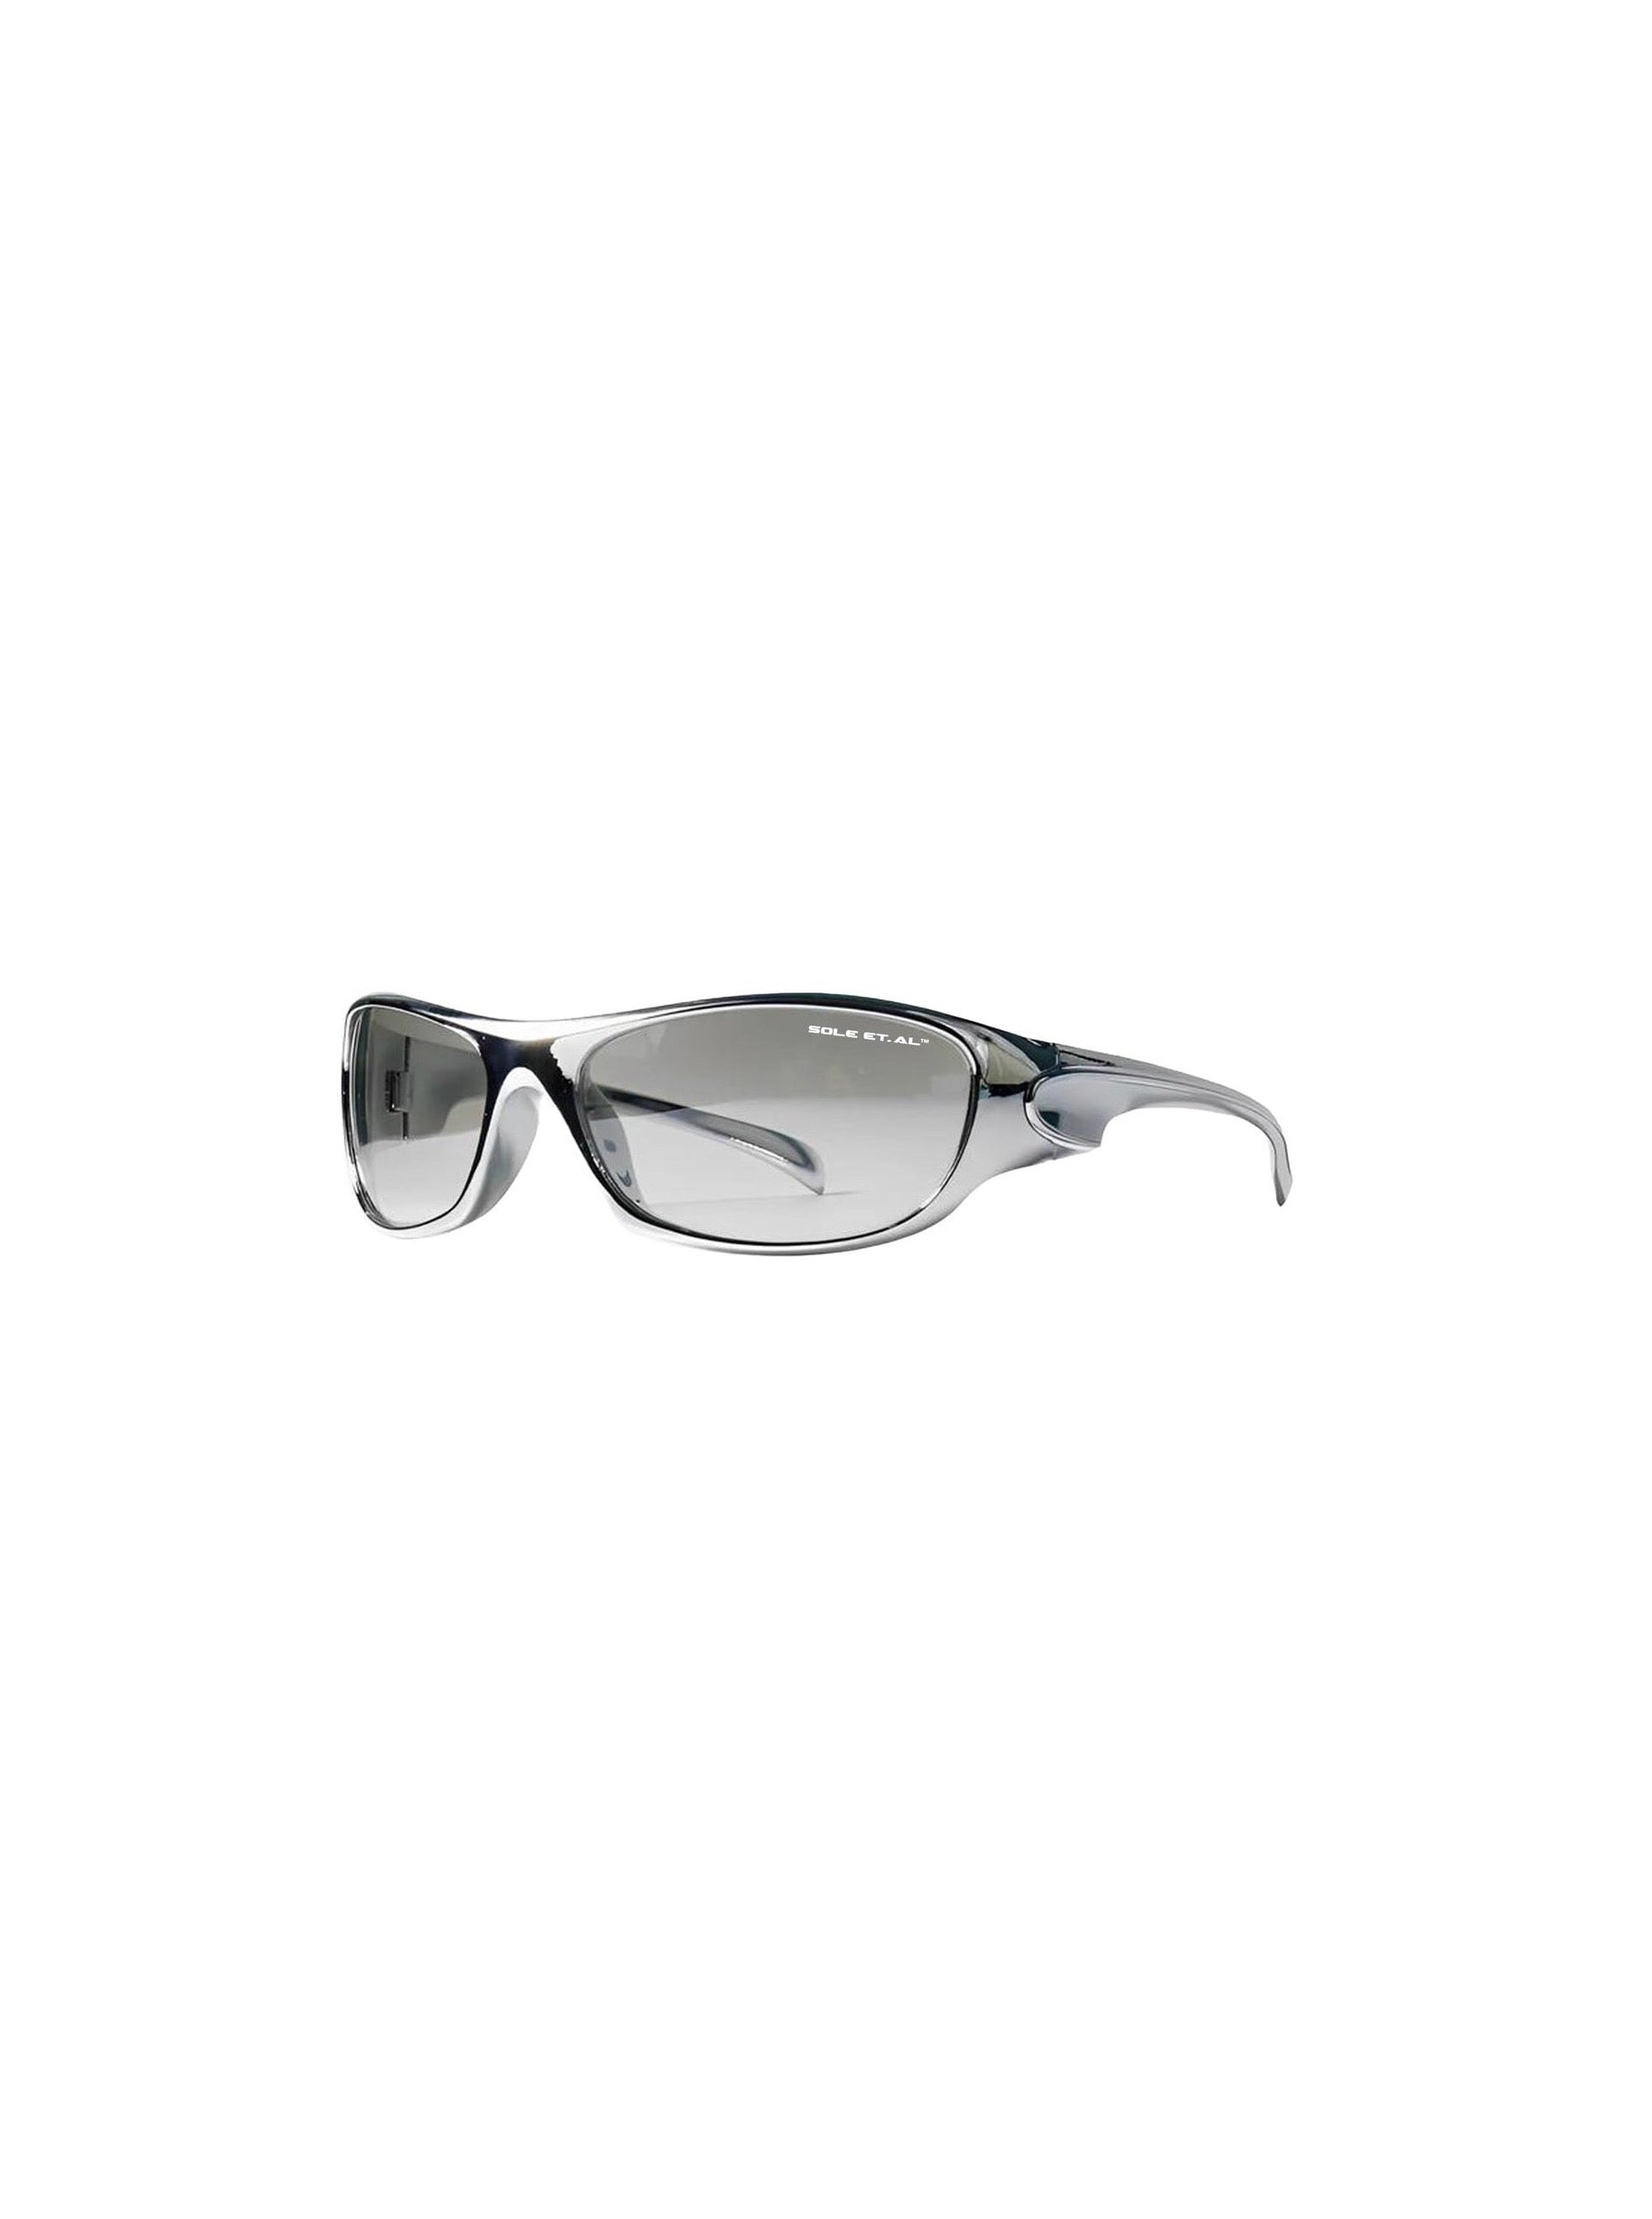 Sole et. Al Racer Glasses : Metallic Silver